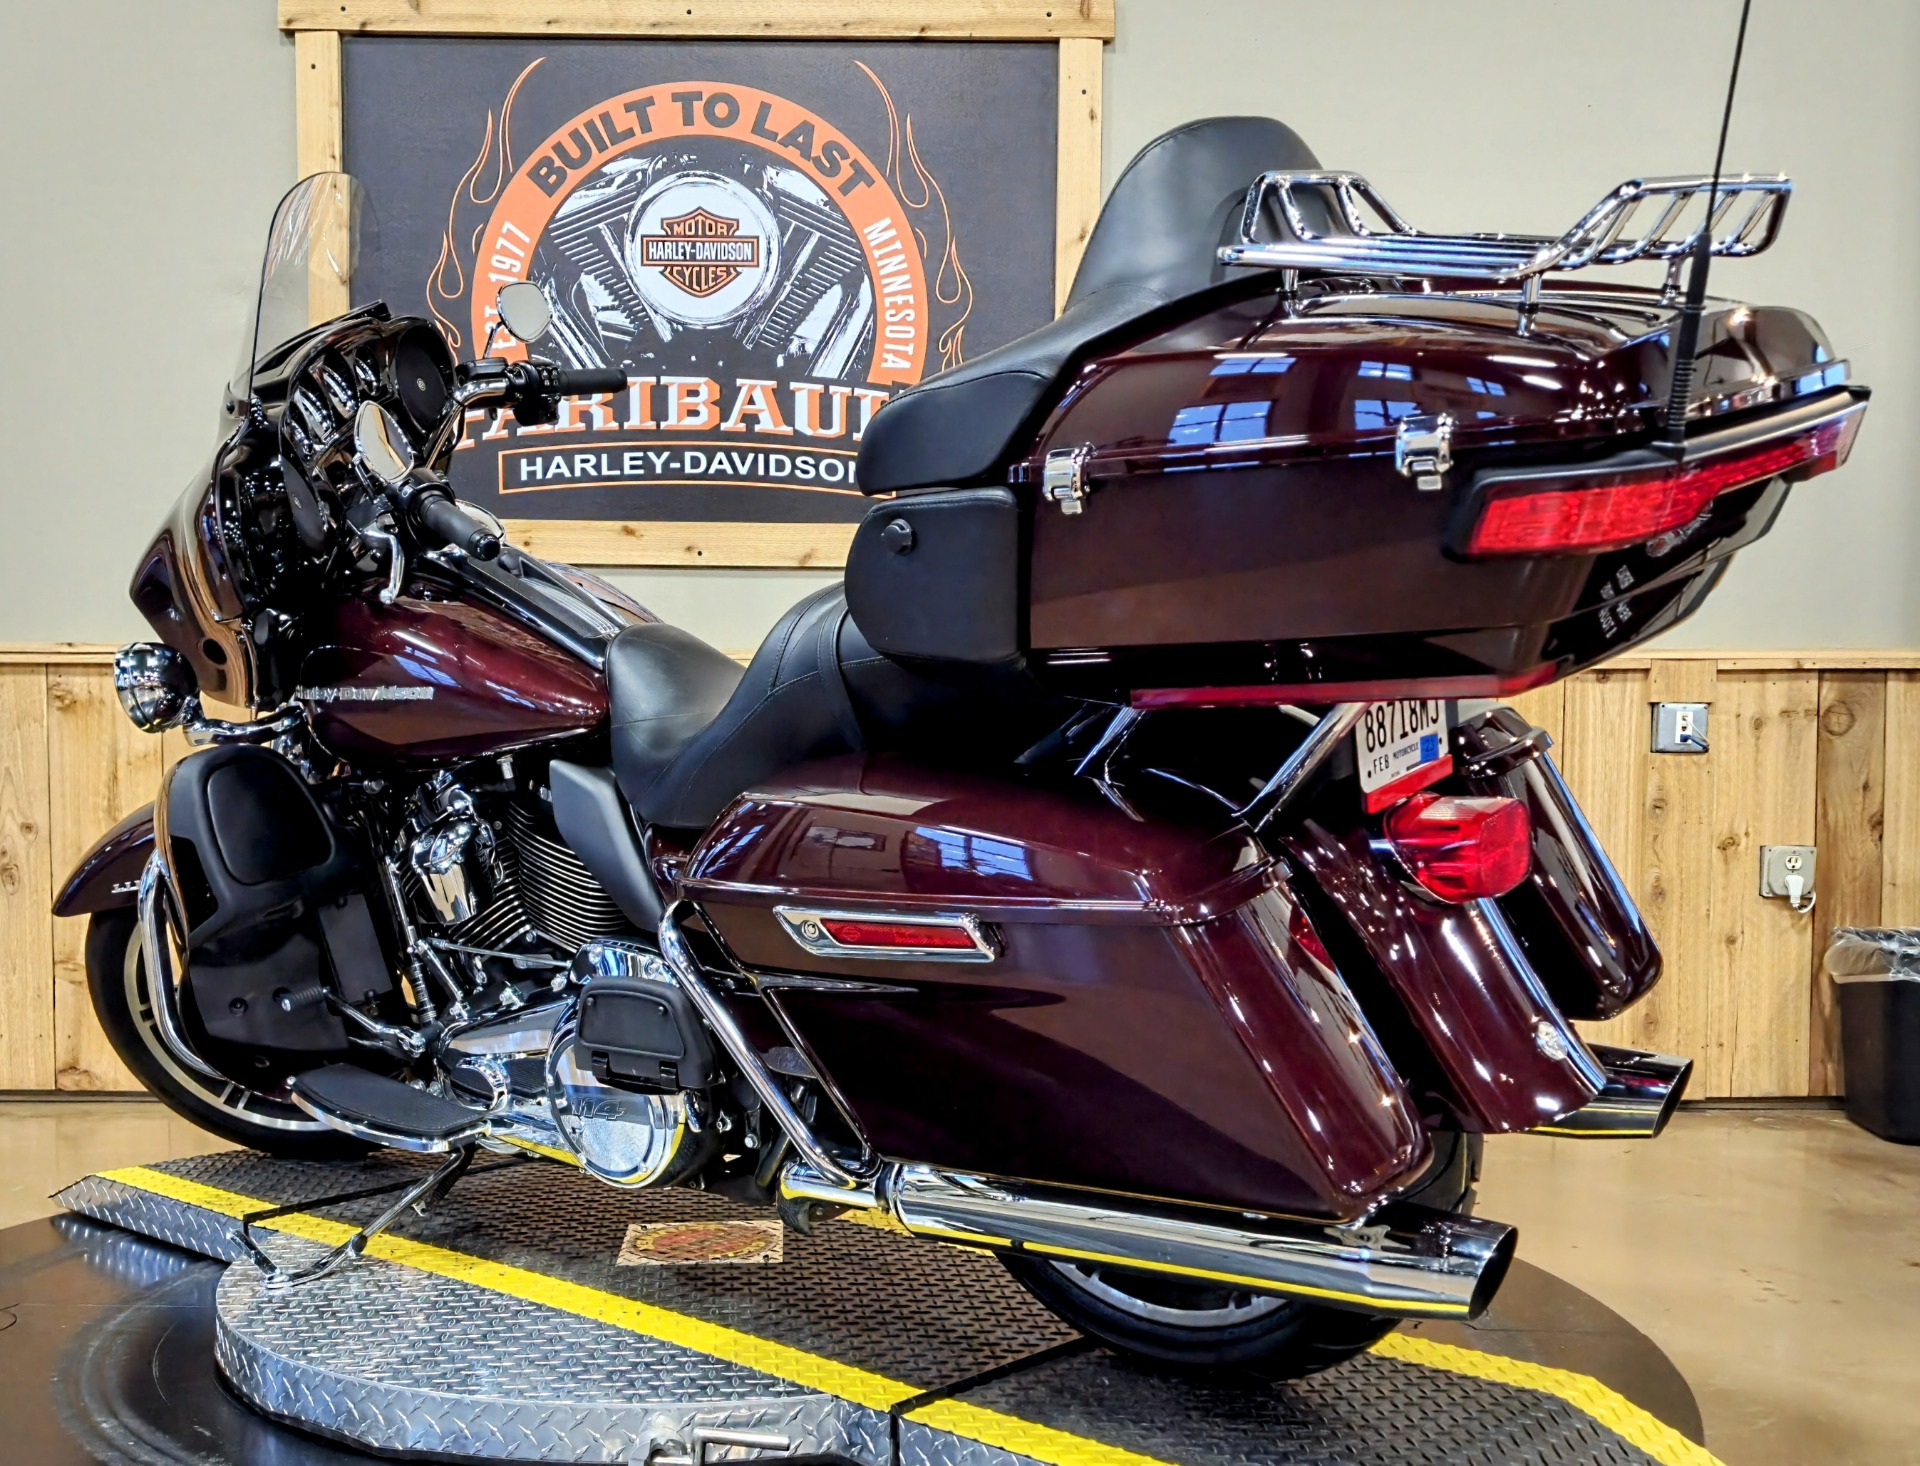 2021 Harley-Davidson Ultra Limited in Faribault, Minnesota - Photo 6